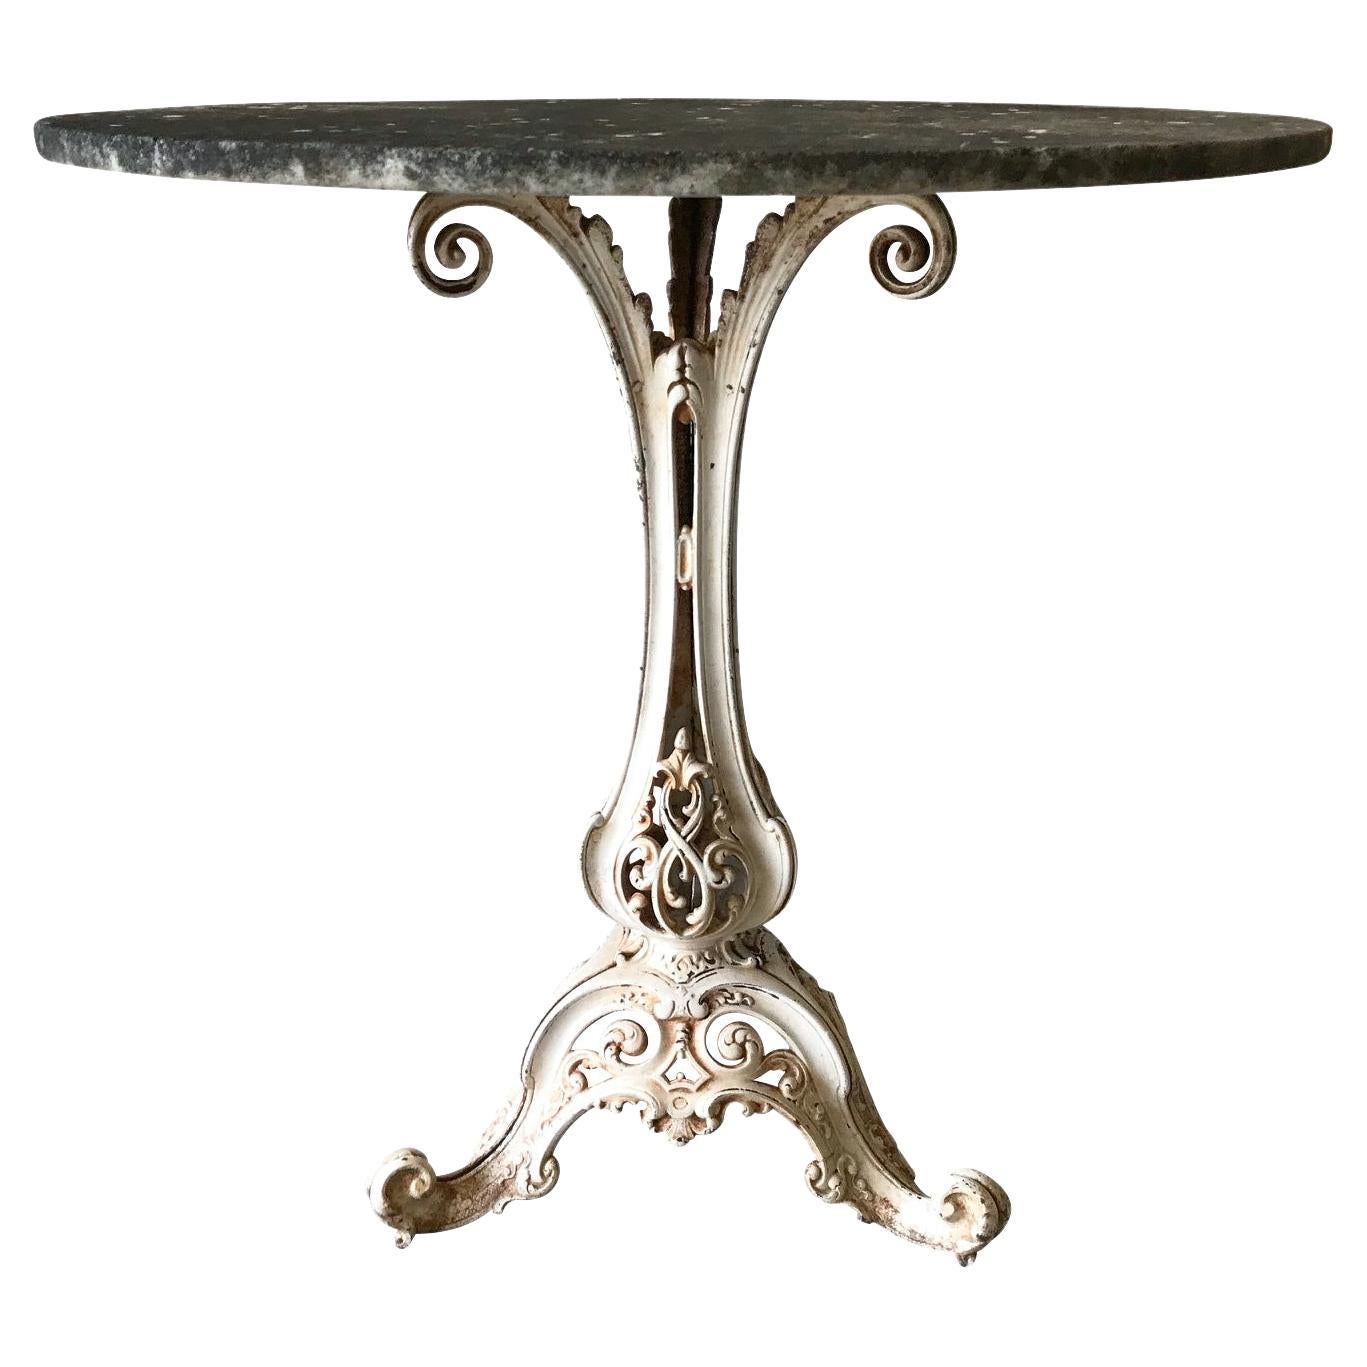 Do cast iron tables rust?